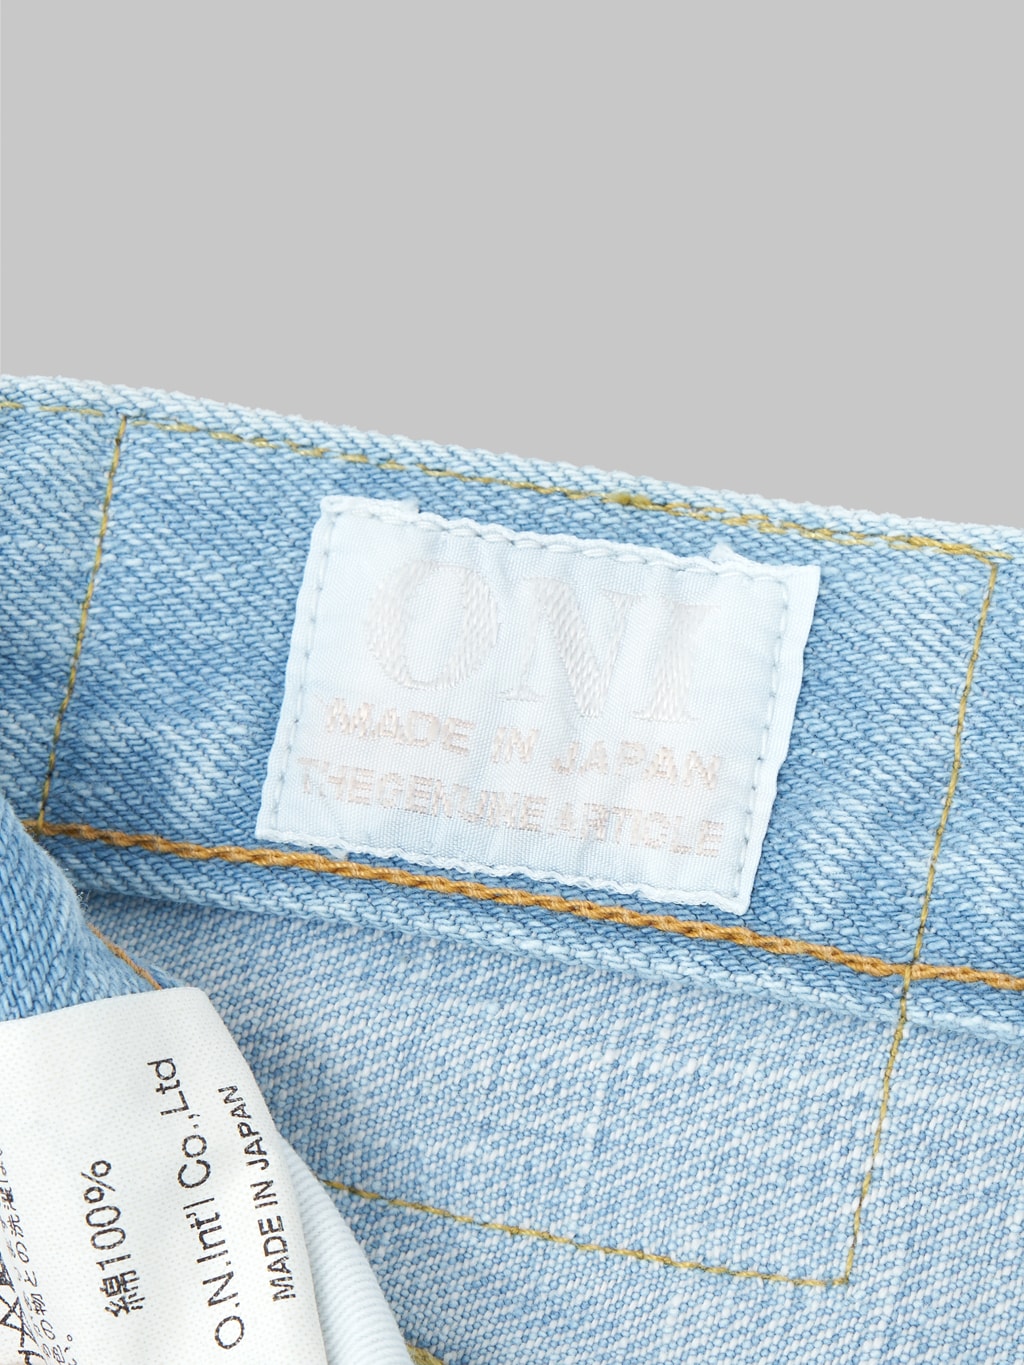 redcast heritage x oni denim kerama blue 15oz selvedge jeans interior tag